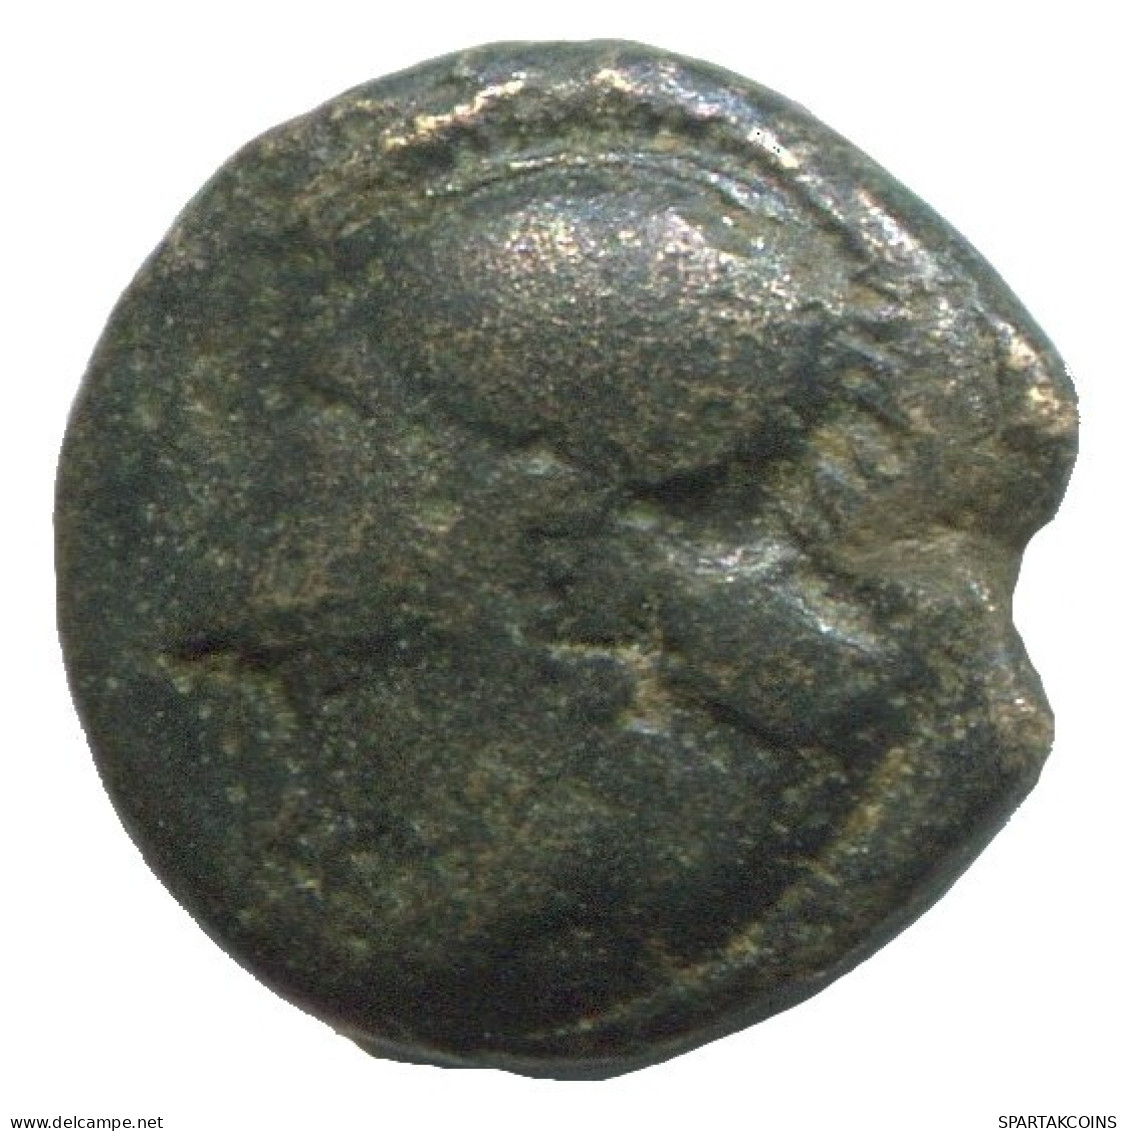 WREATH Authentic Original Ancient GREEK Coin 1.4g/11mm #NNN1325.9.U.A - Griechische Münzen